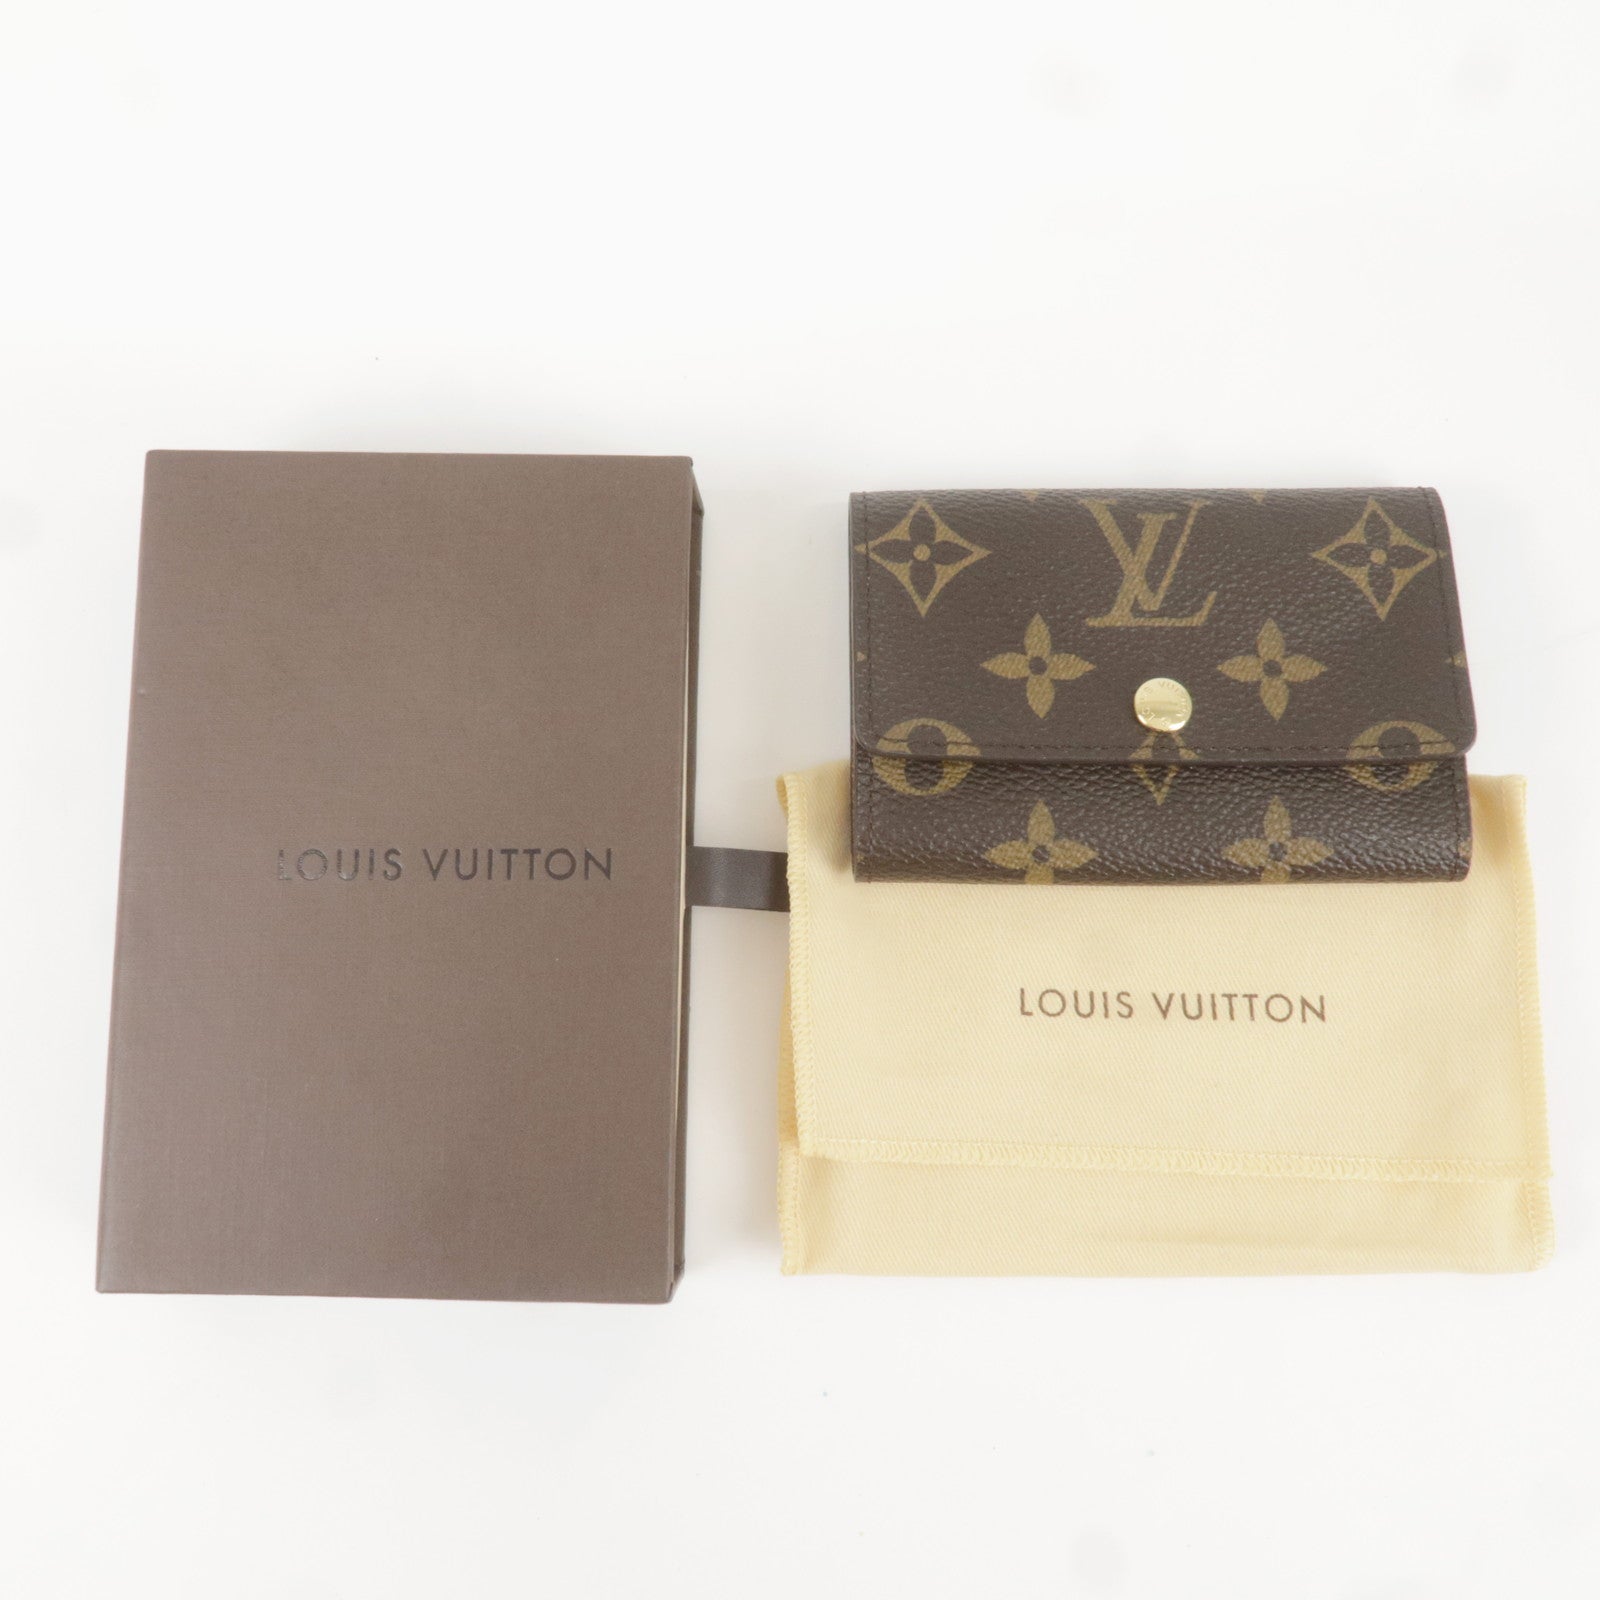 Shop Louis Vuitton MONOGRAM 6 key holder (M62630) by